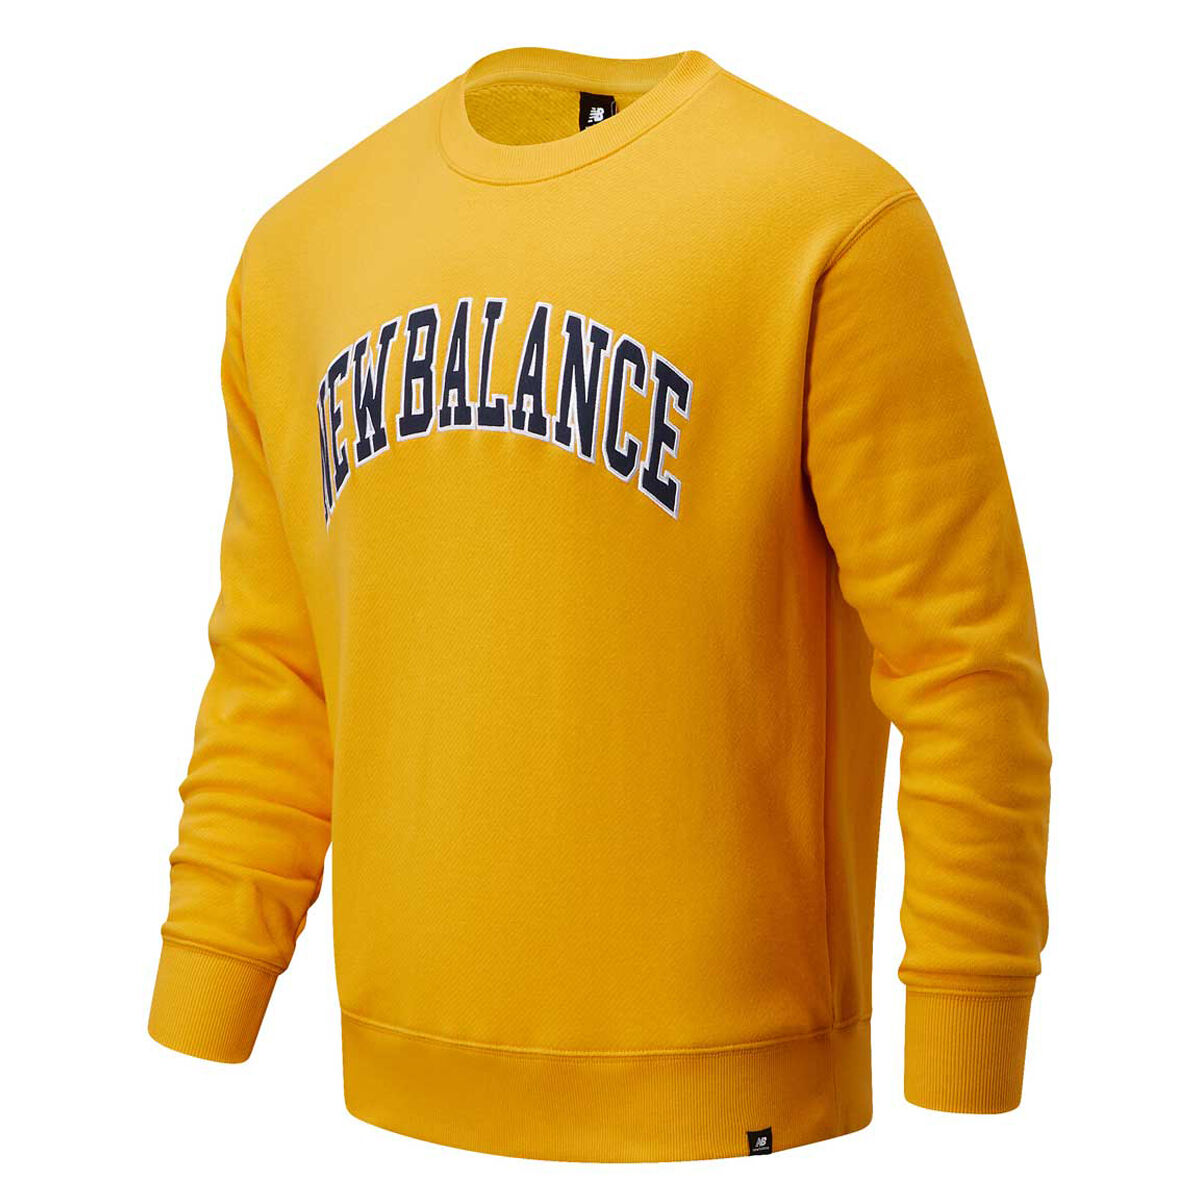 new balance yellow sweatshirt